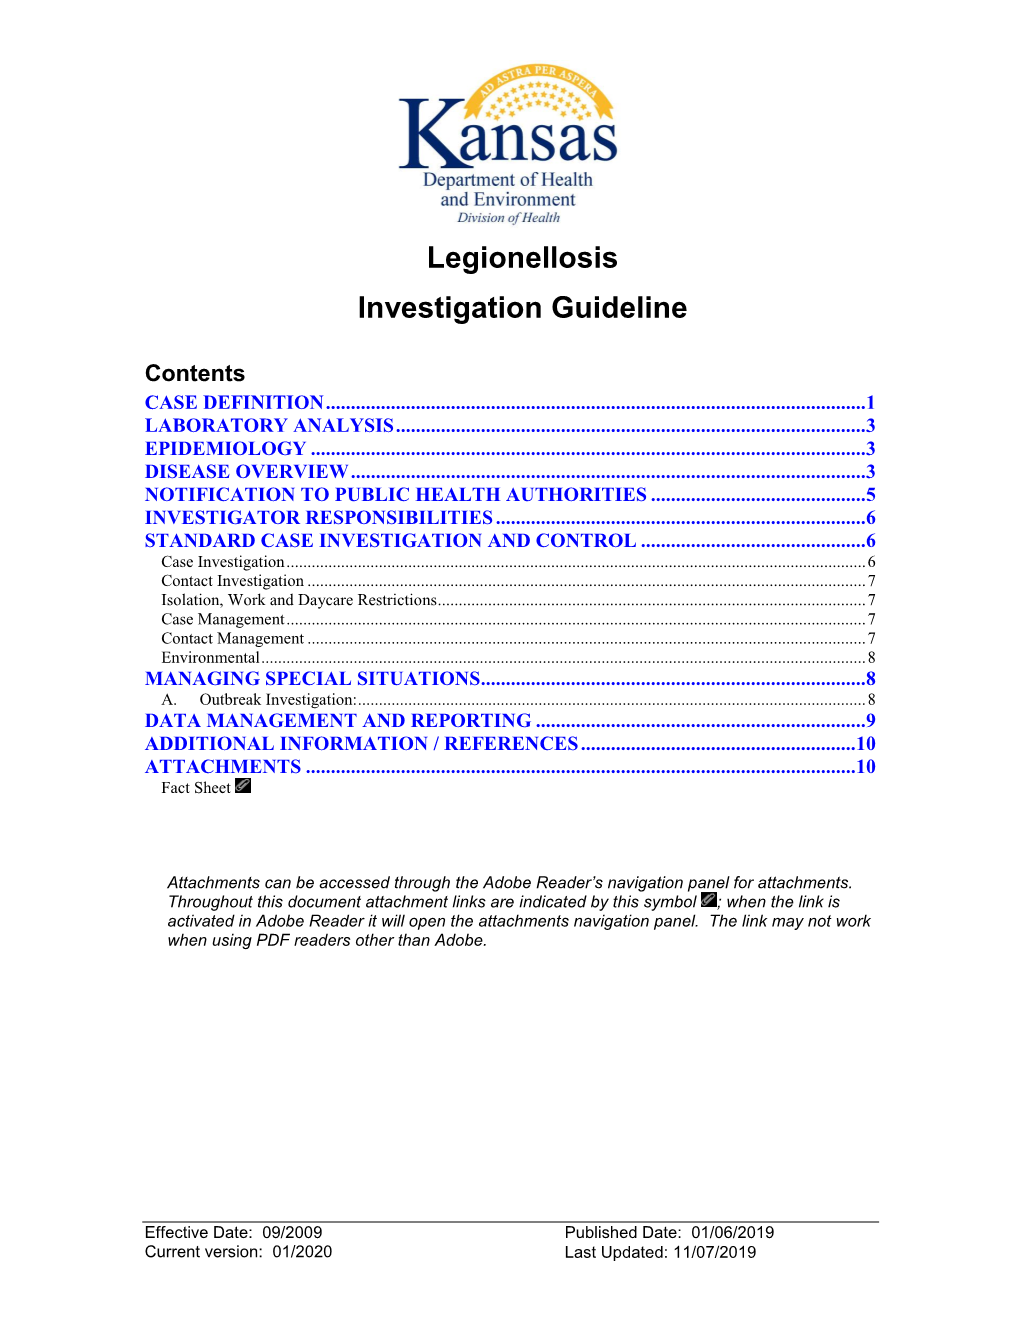 Legionellosis Investigation Guideline